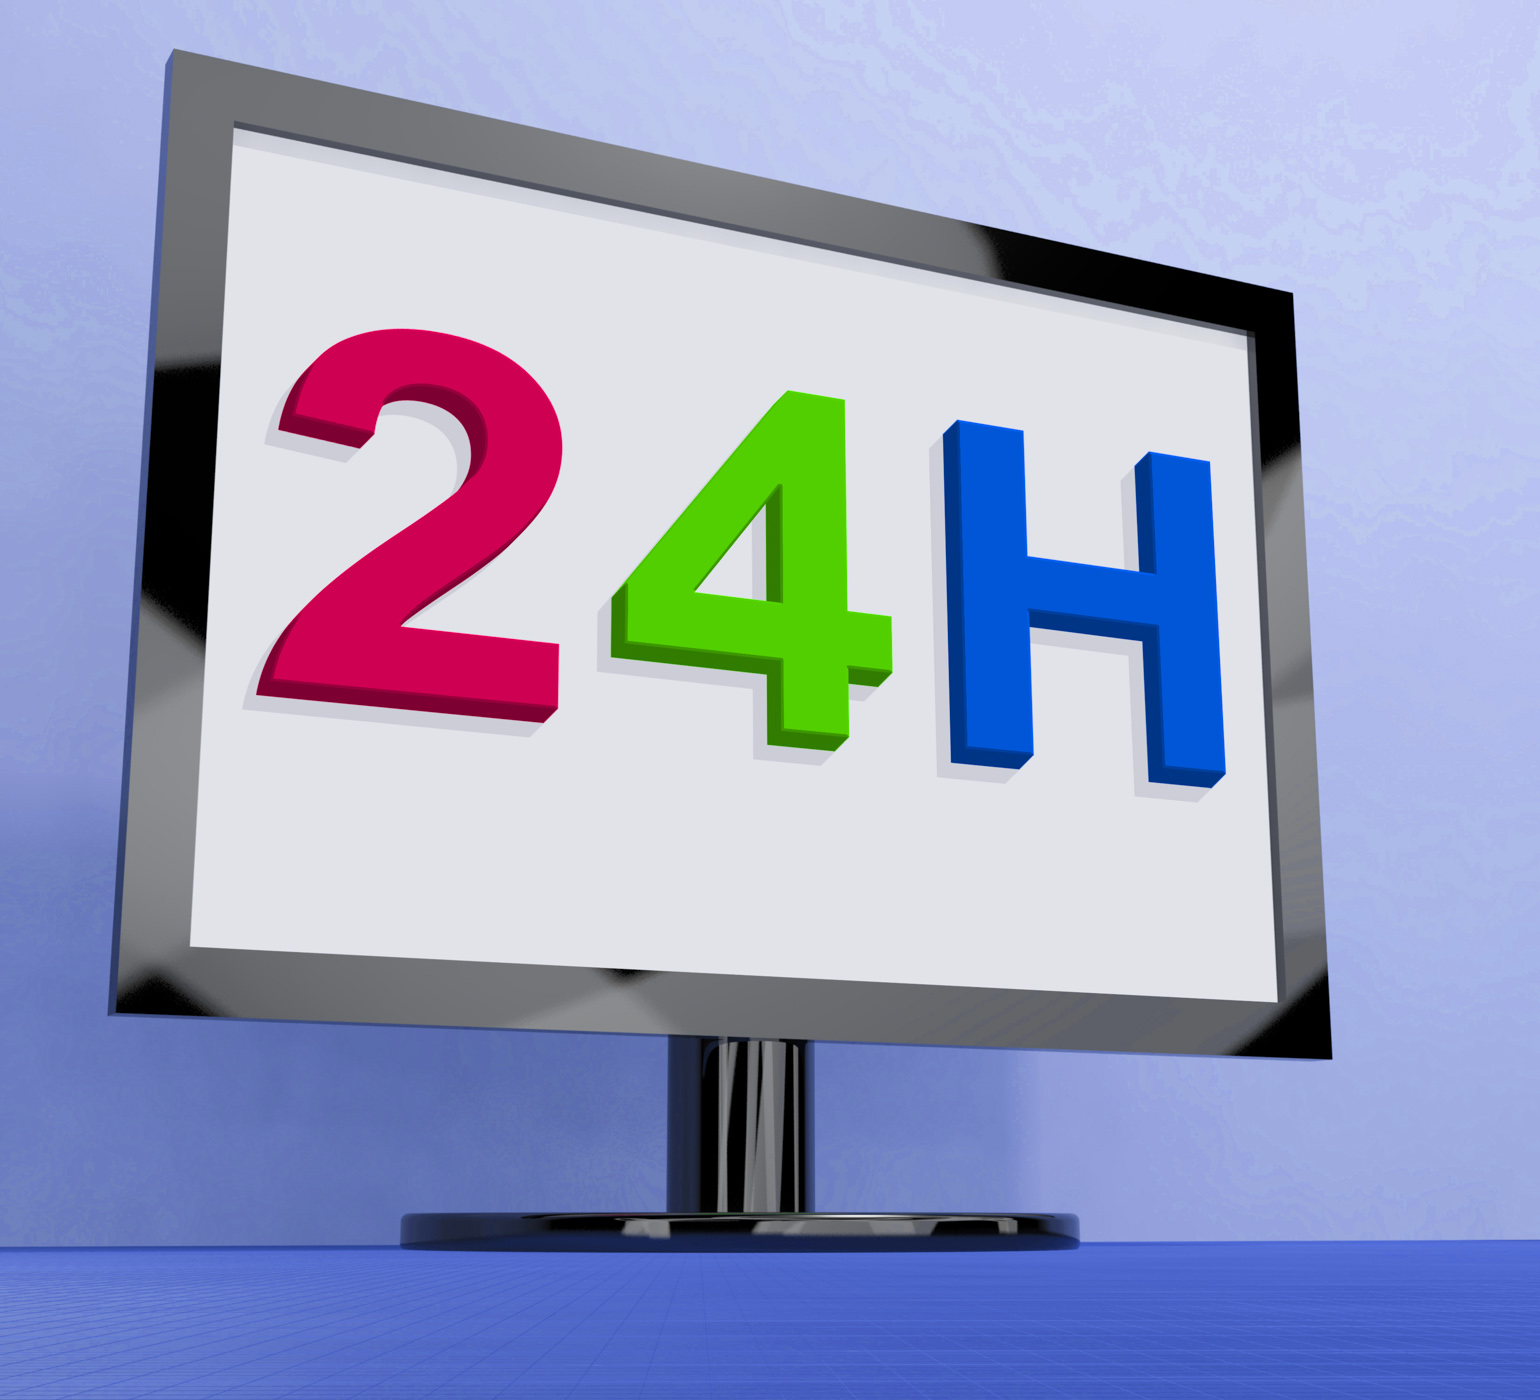 24h On Monitor Shows All Day Service Online, 24, Internet, Twentyfour, Twenty, HQ Photo